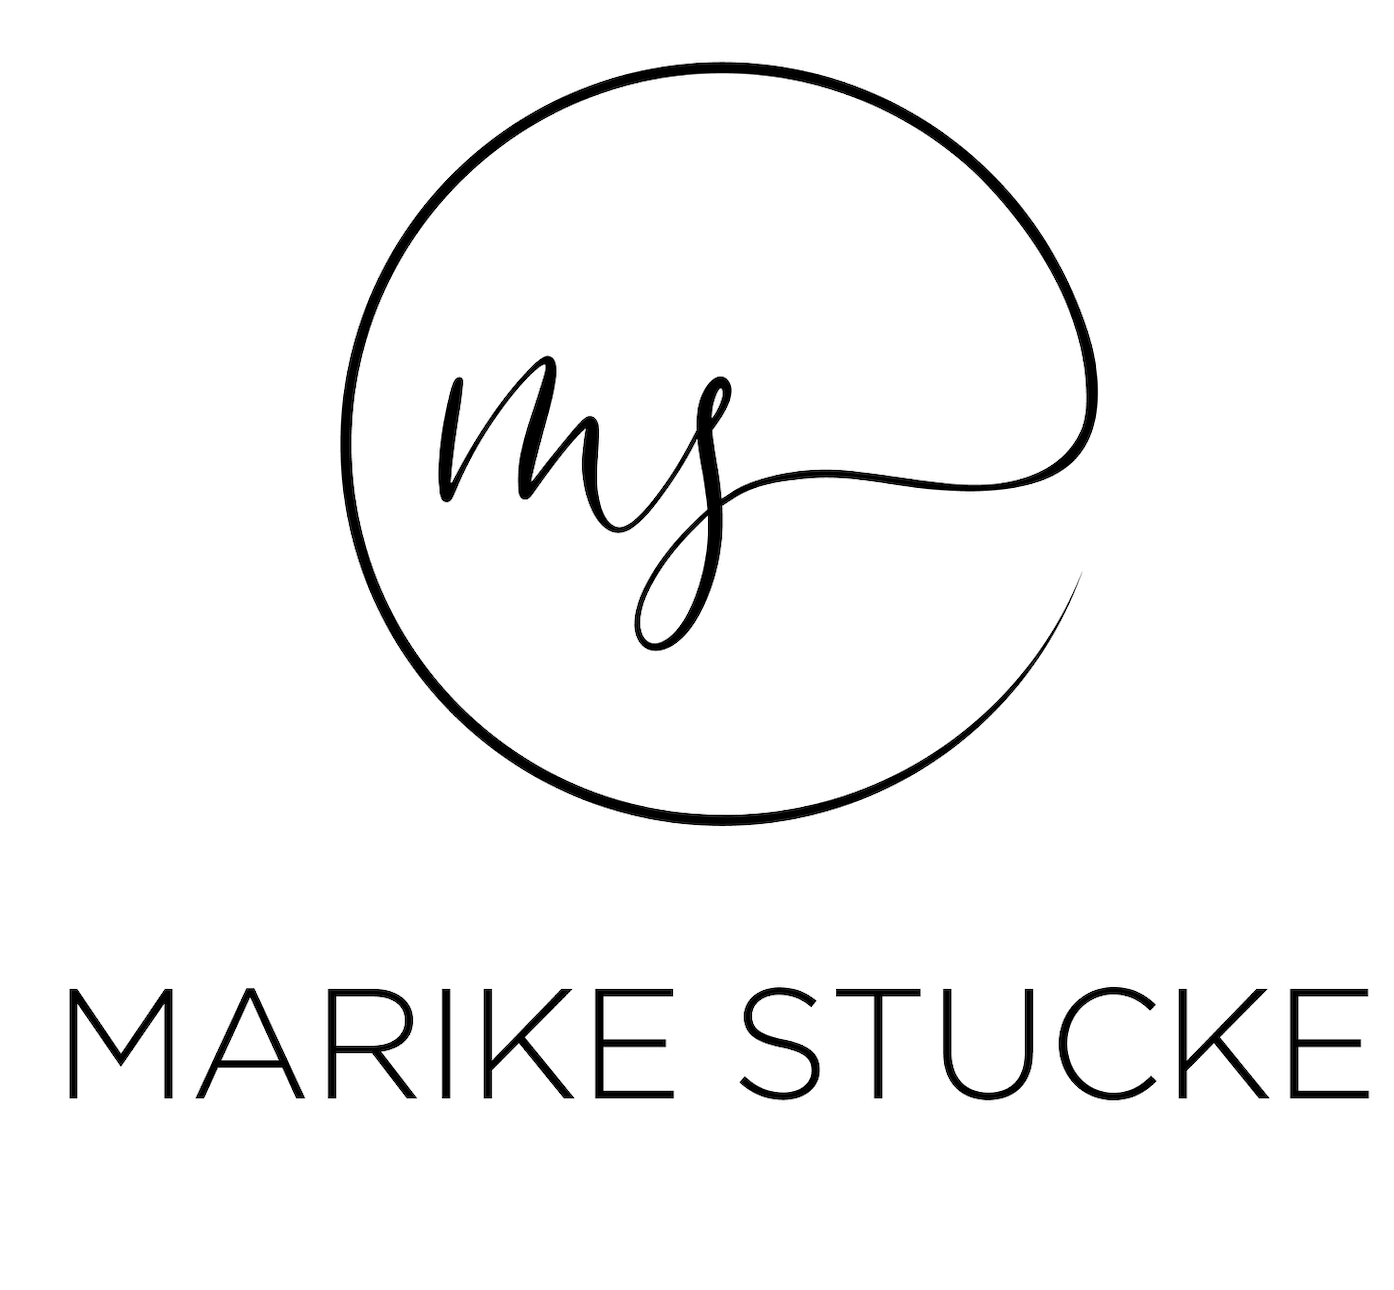 Marike Stucke